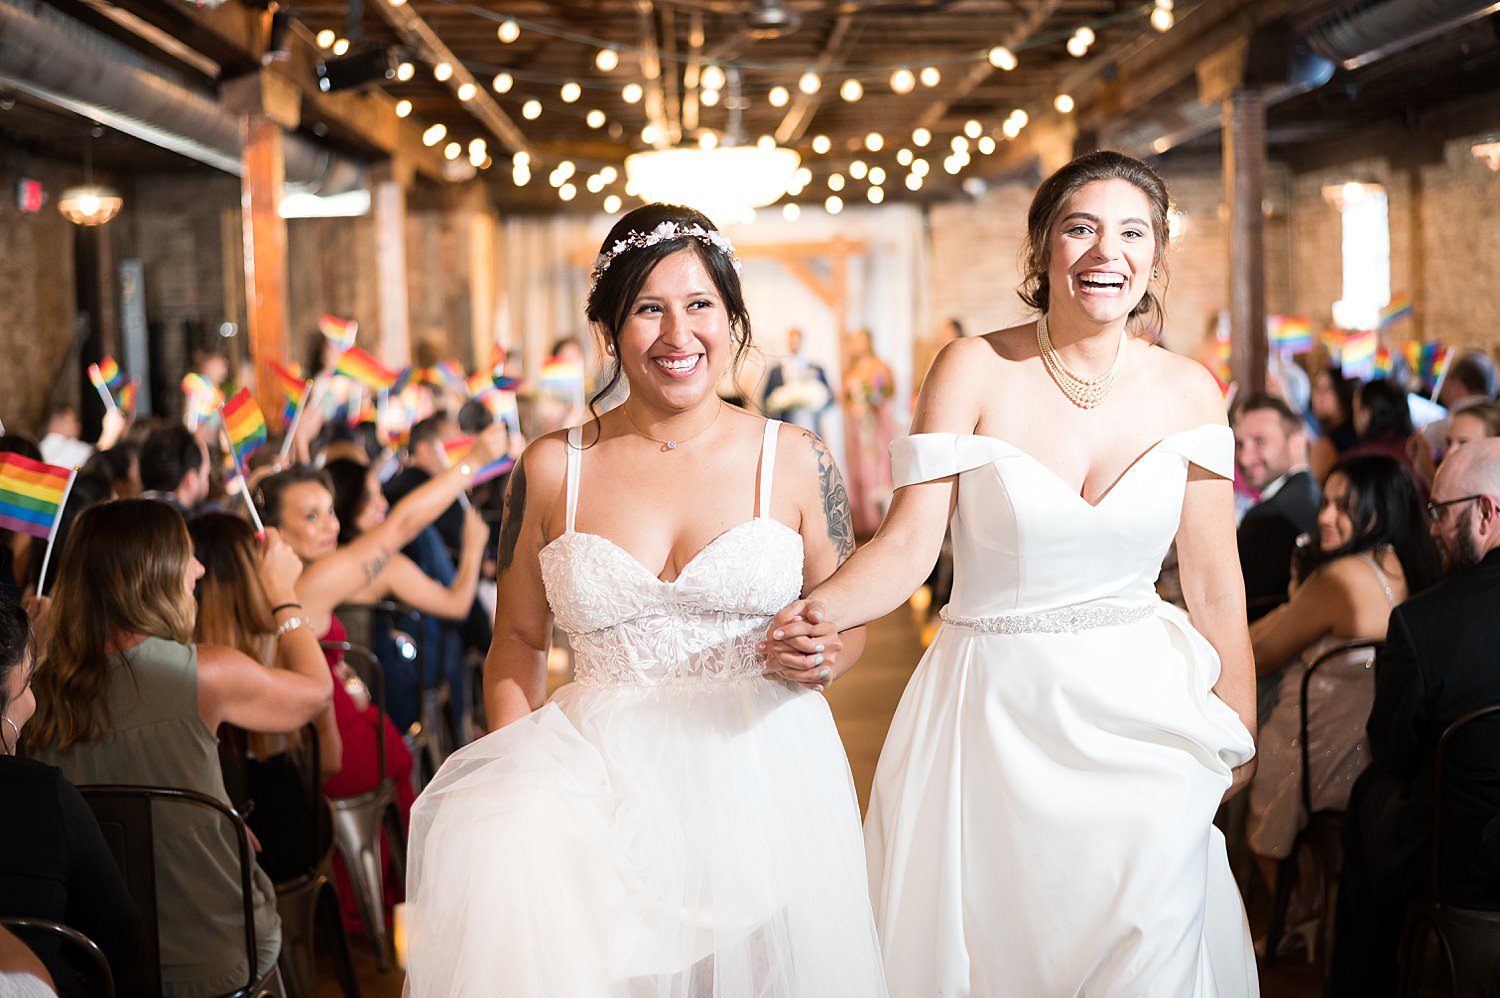 Guest wave rainbow flags as brides walk down wedding aisle at The Haight.